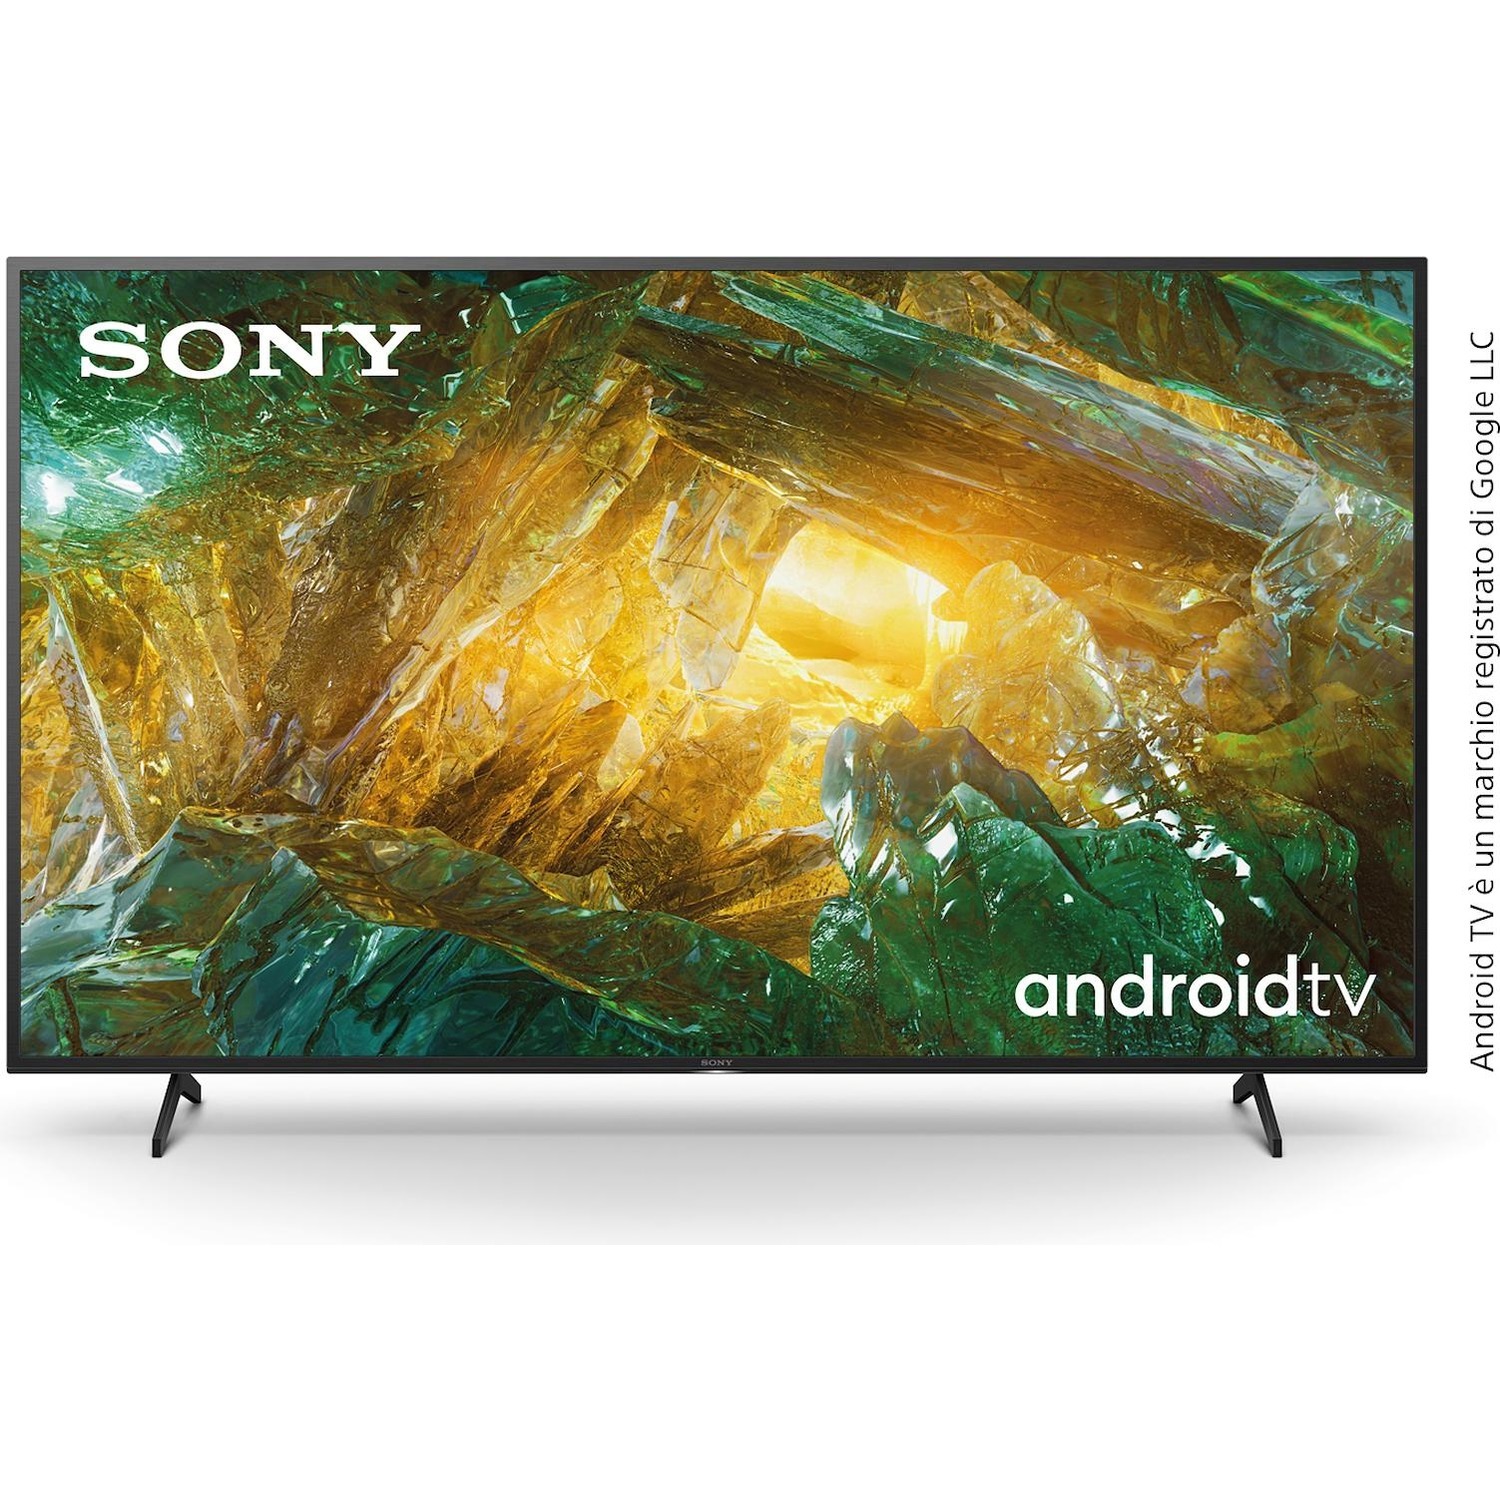 Immagine per TV LED Smart 4K UHD Sony KE-55XH8096 da DIMOStore